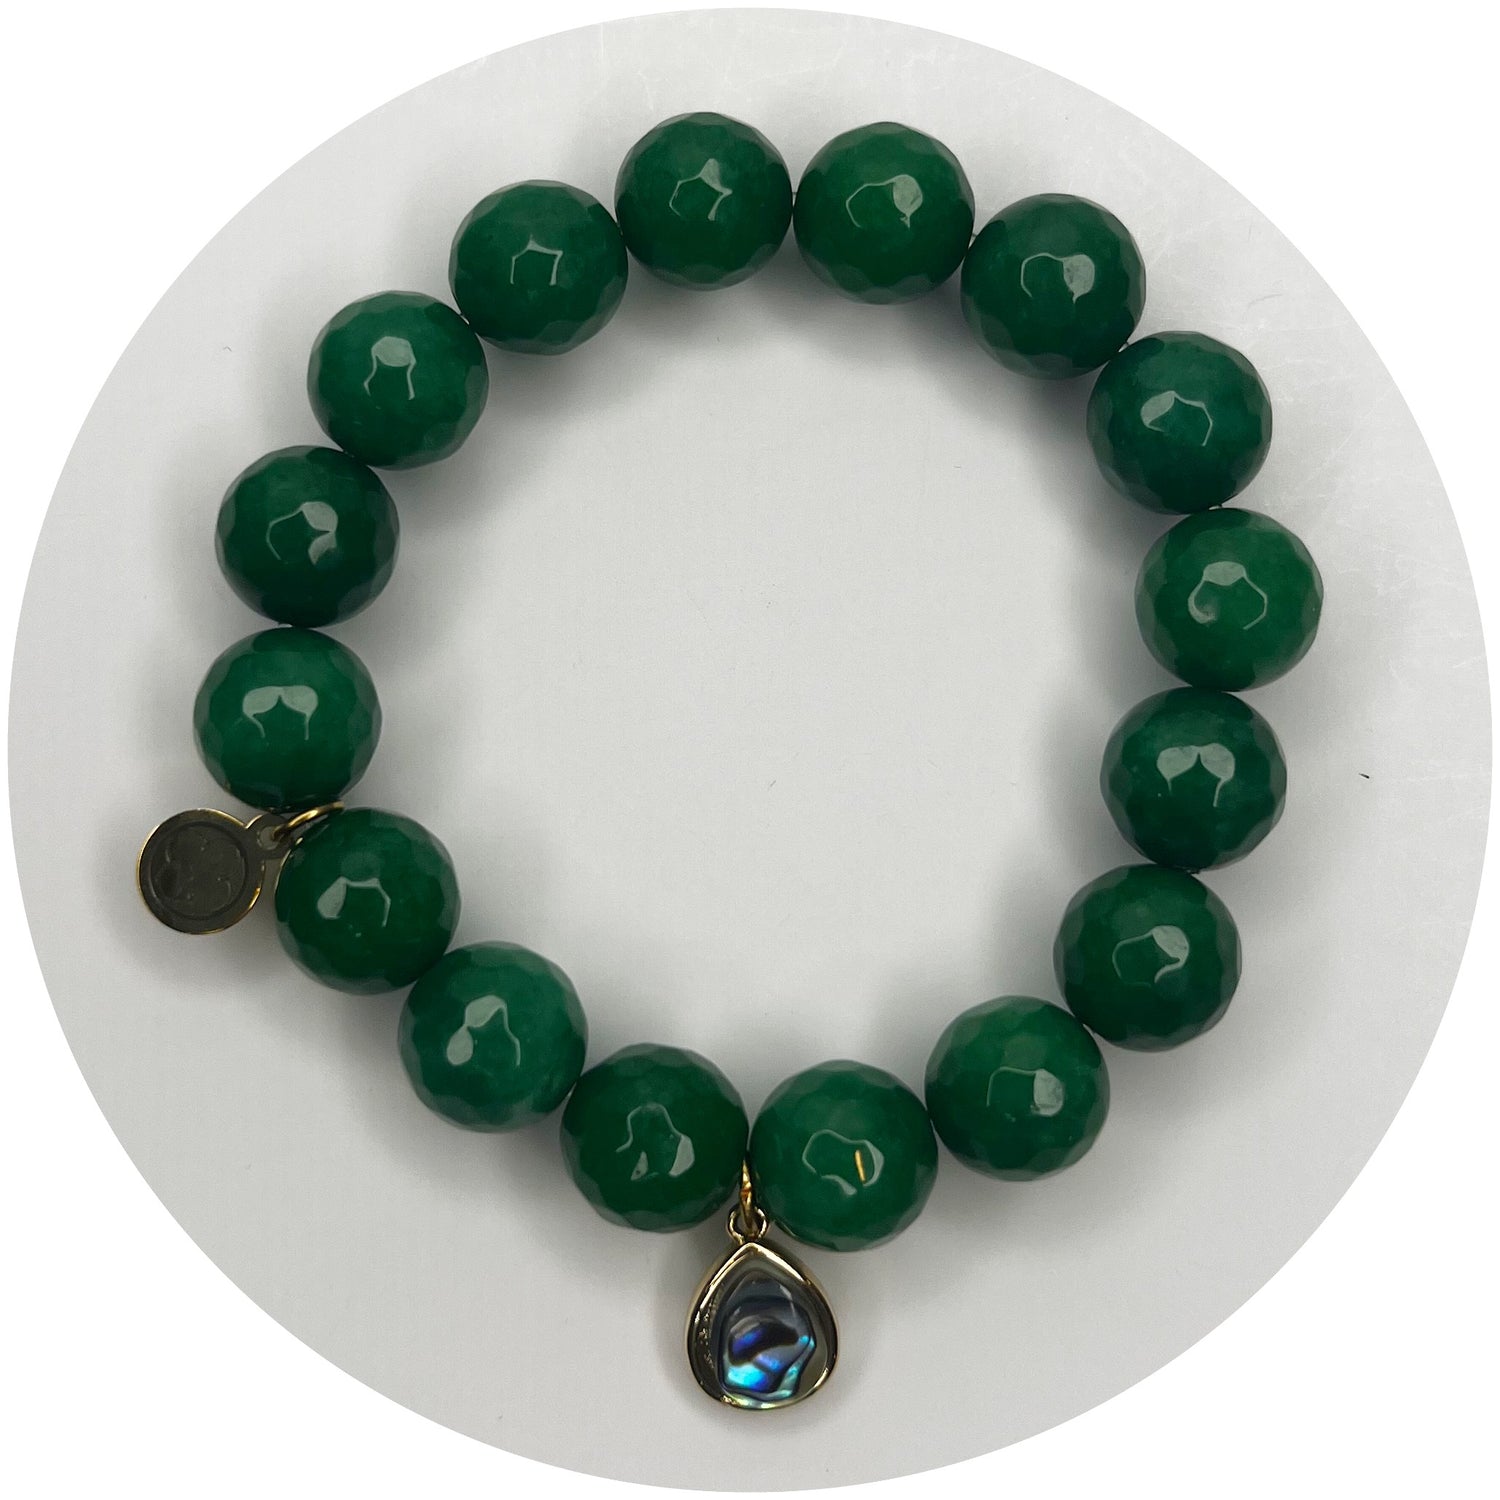 Emerald Green Jade with Abalone Teardrop Pendant